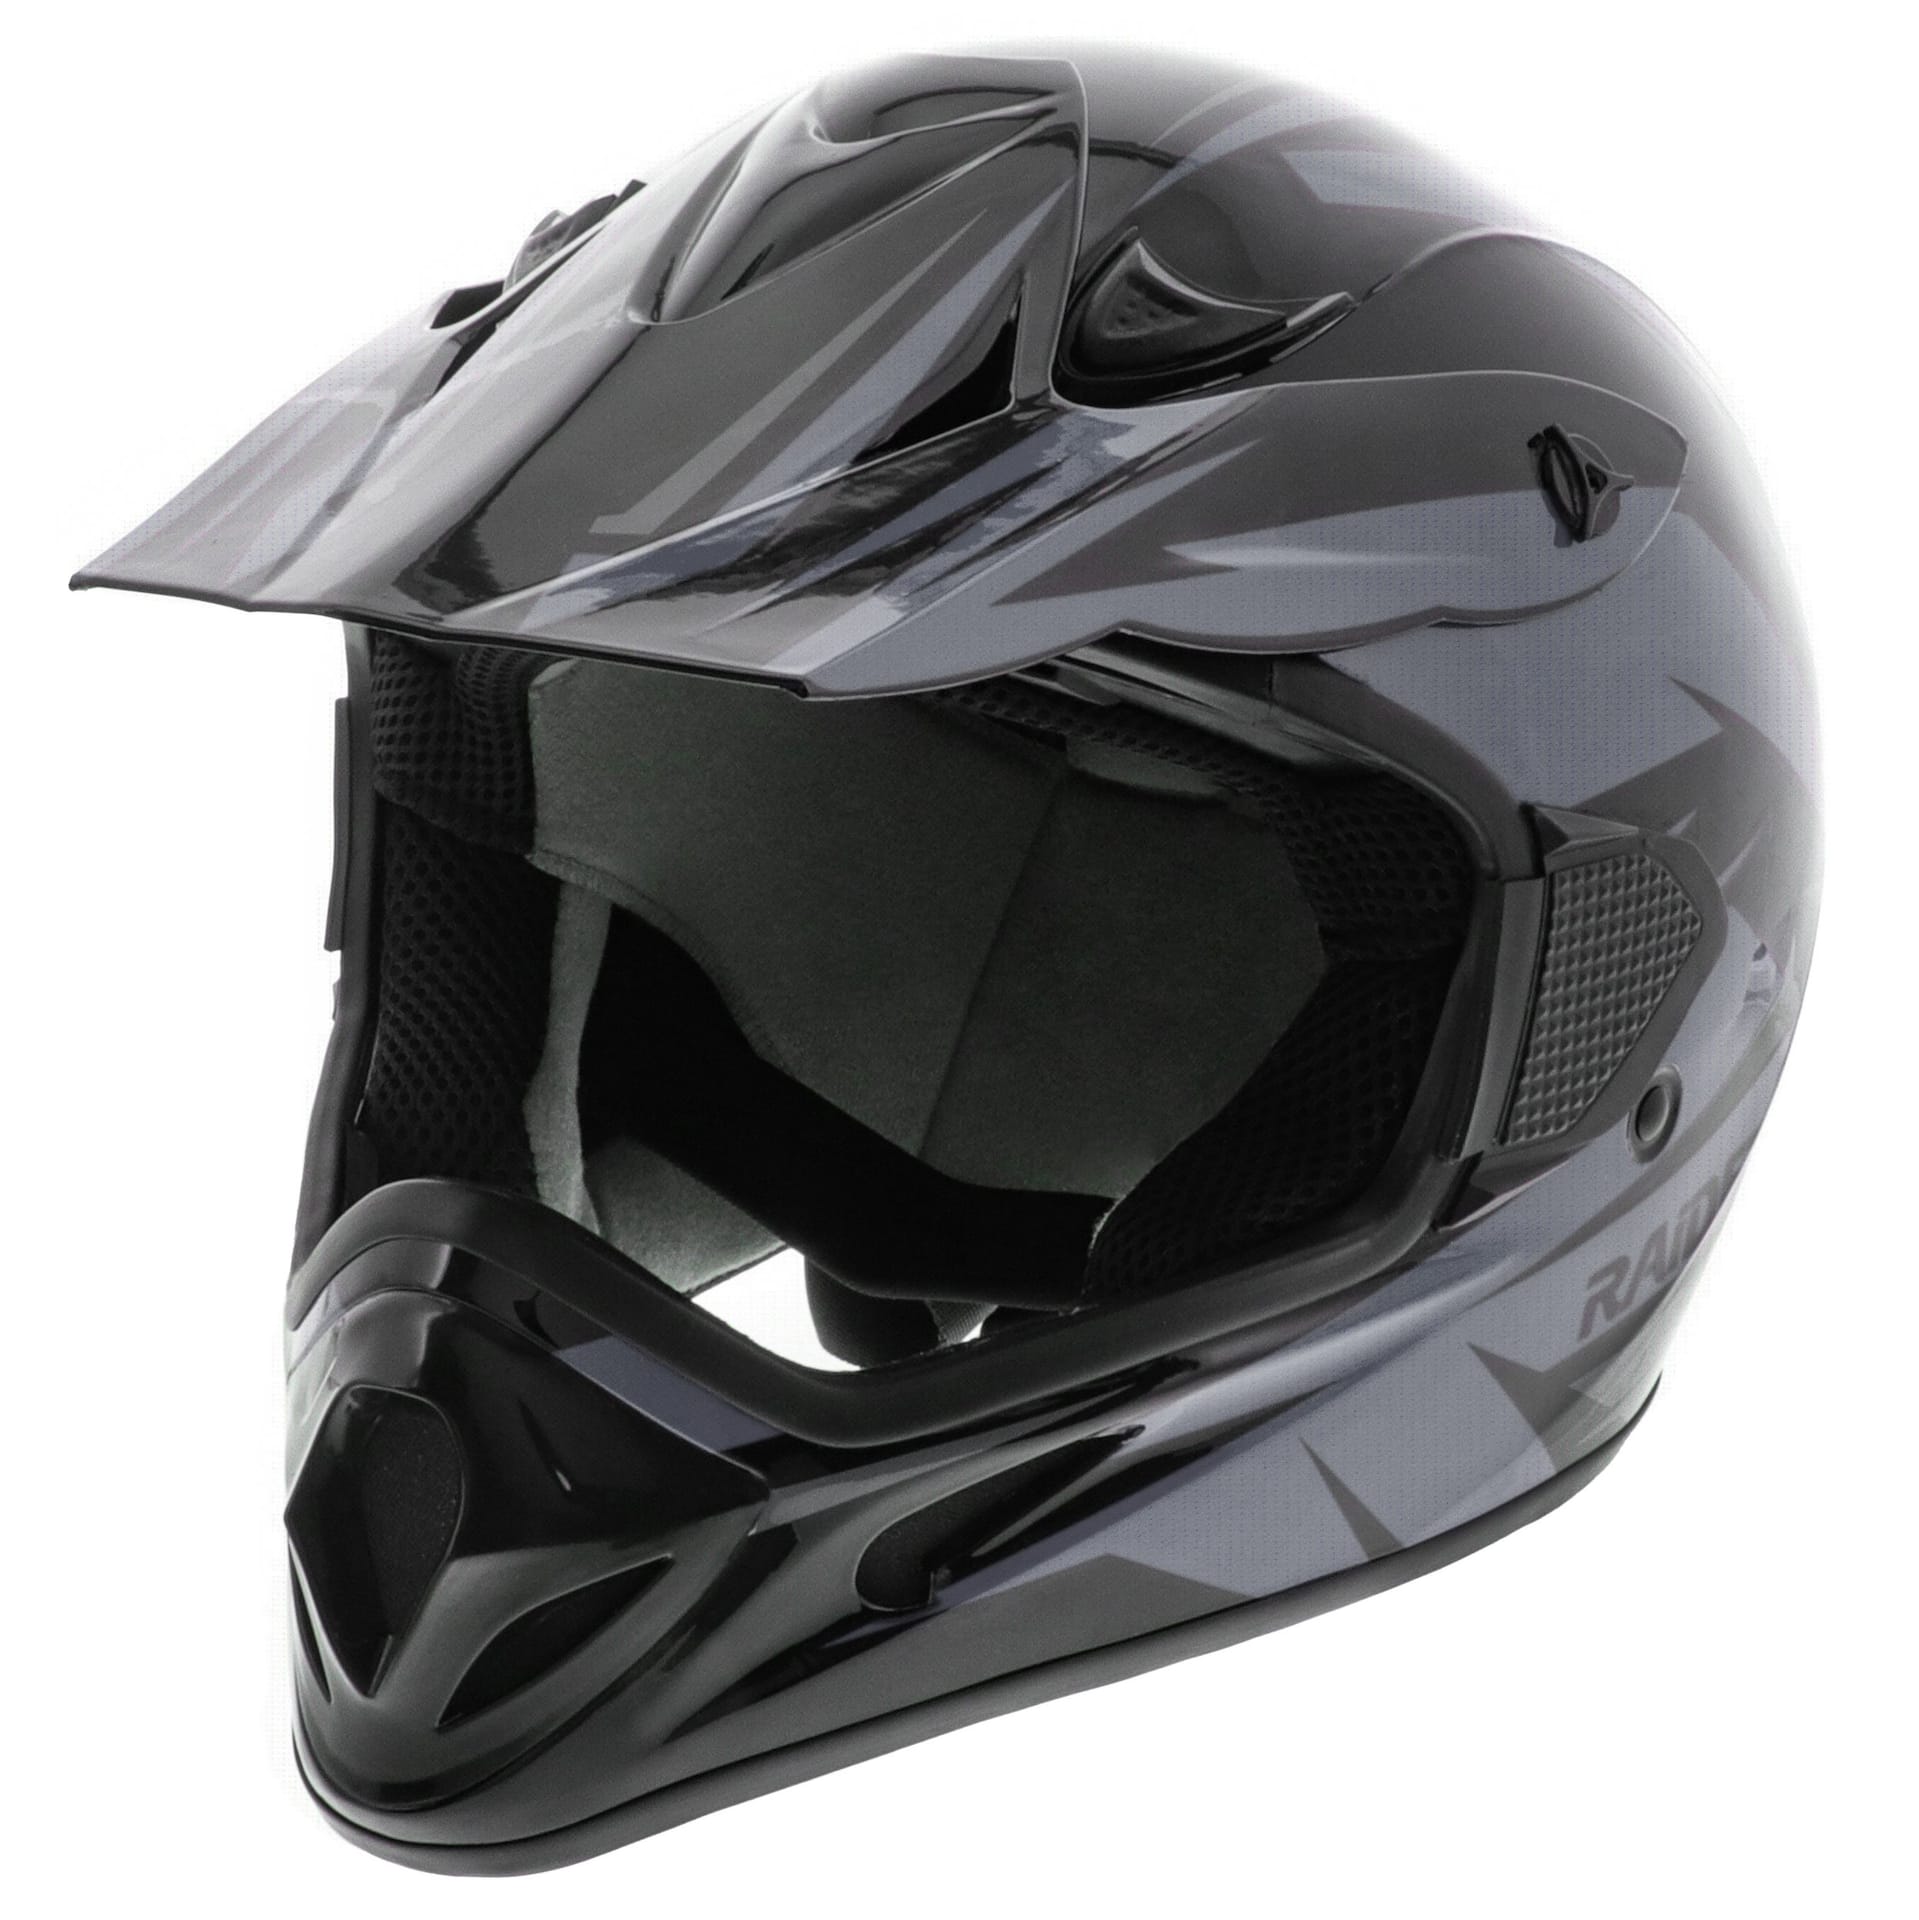 Raider RX2 ATV Helmet, Adult, Black/Grey, Assorted Sizes